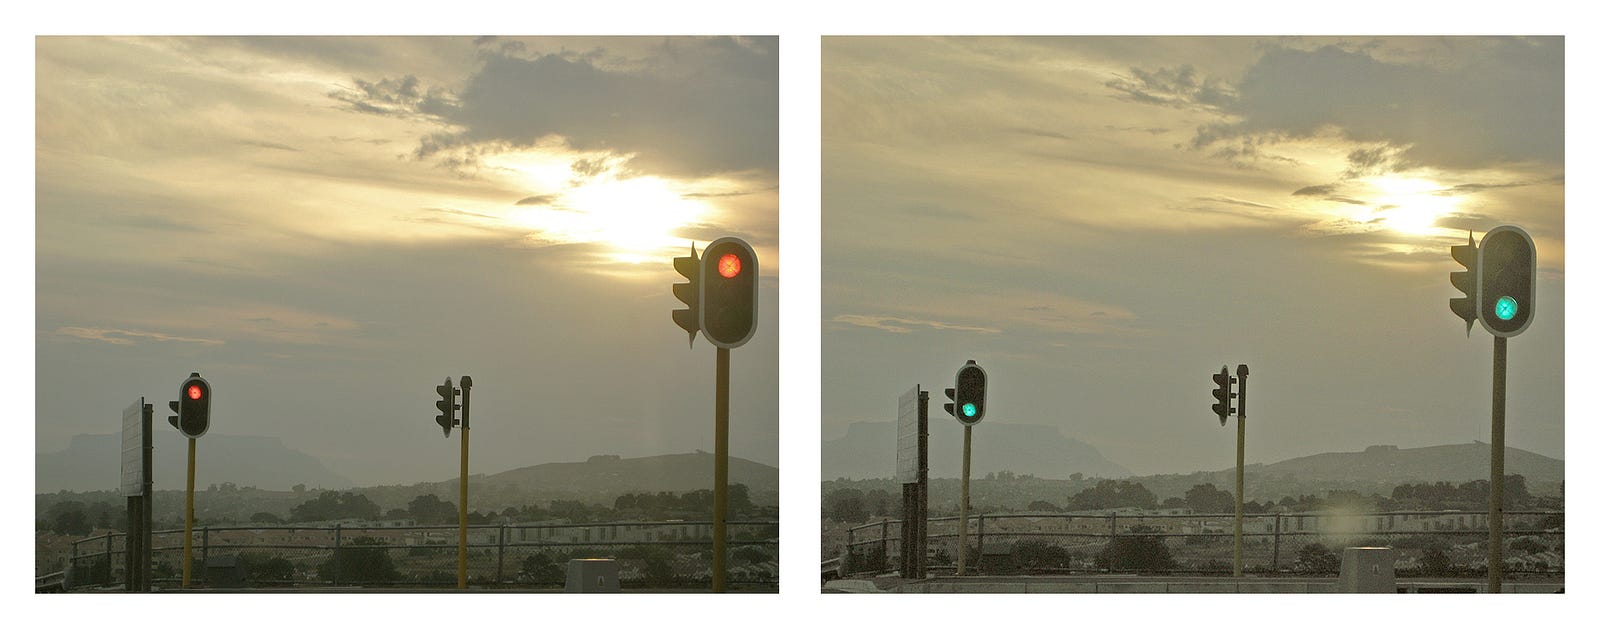 Robots/Traffic Light by mallix